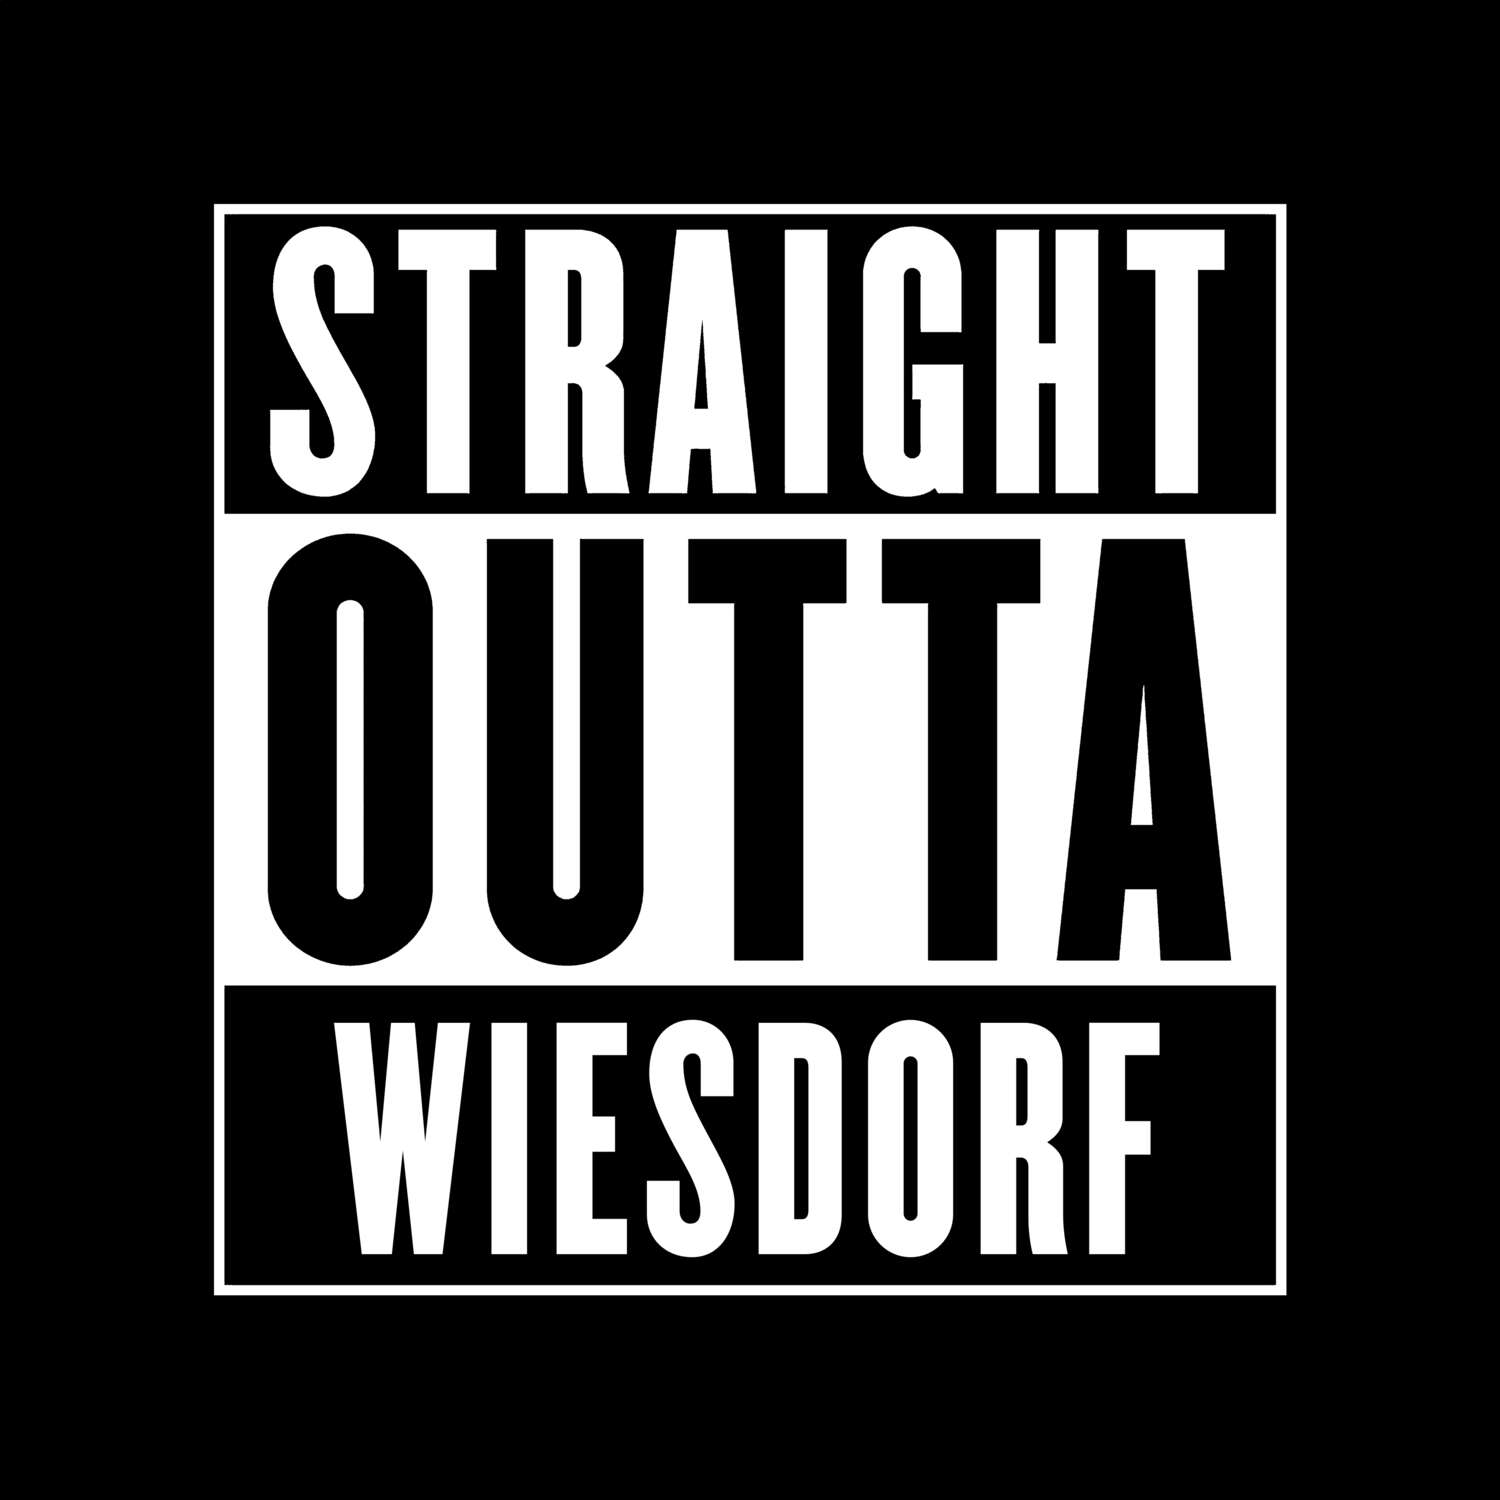 Wiesdorf T-Shirt »Straight Outta«